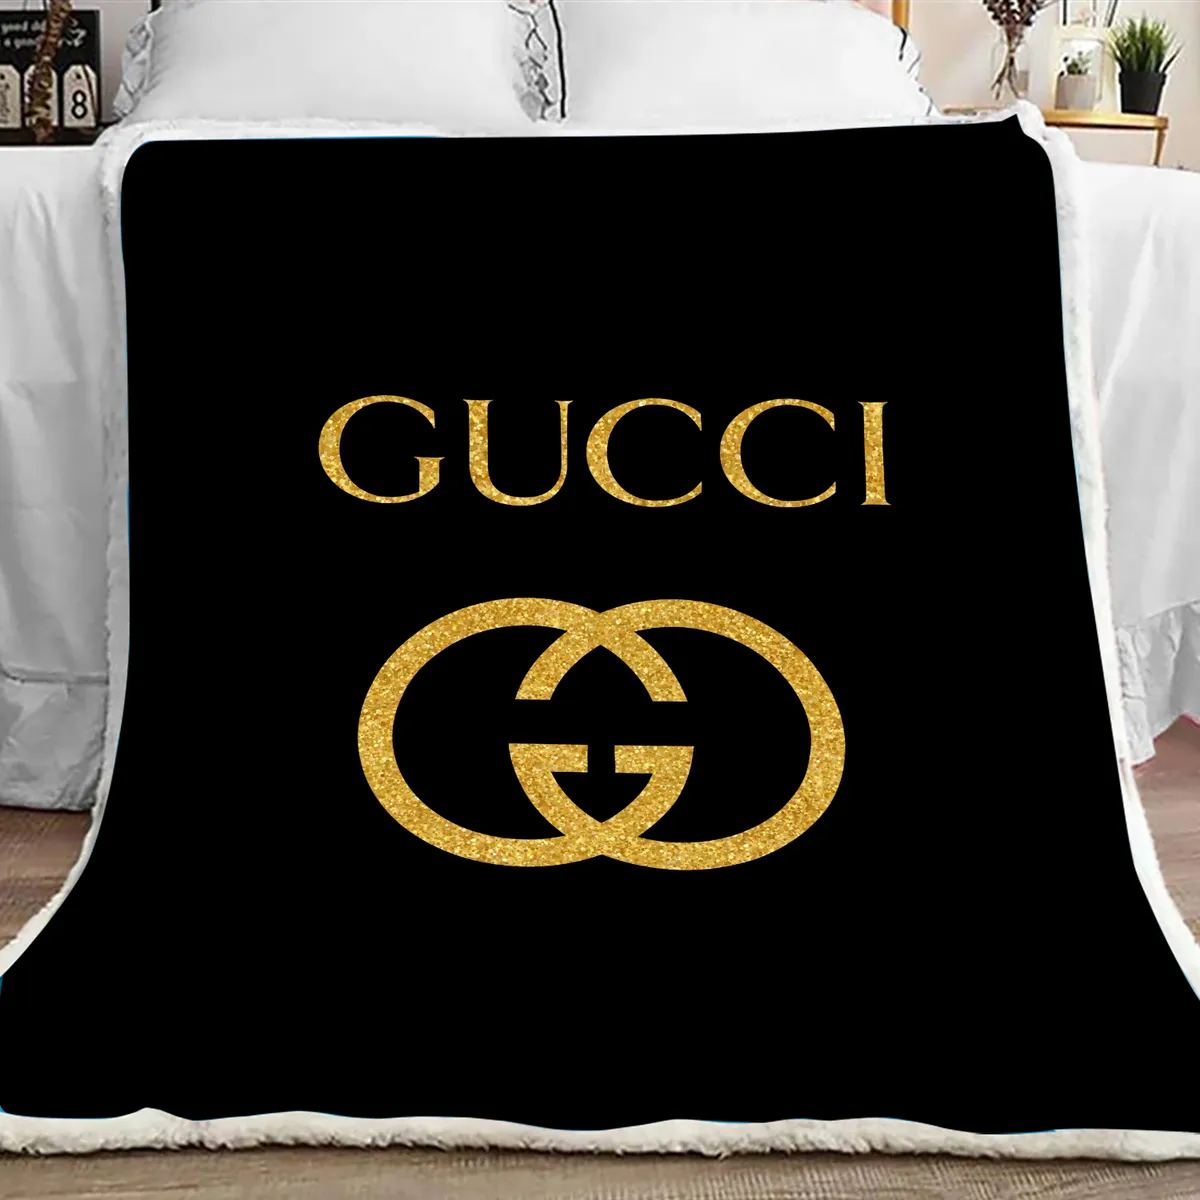 Gucci Black Golden Logo Fleece Blanket Luxury Fashion Brand Home Decor